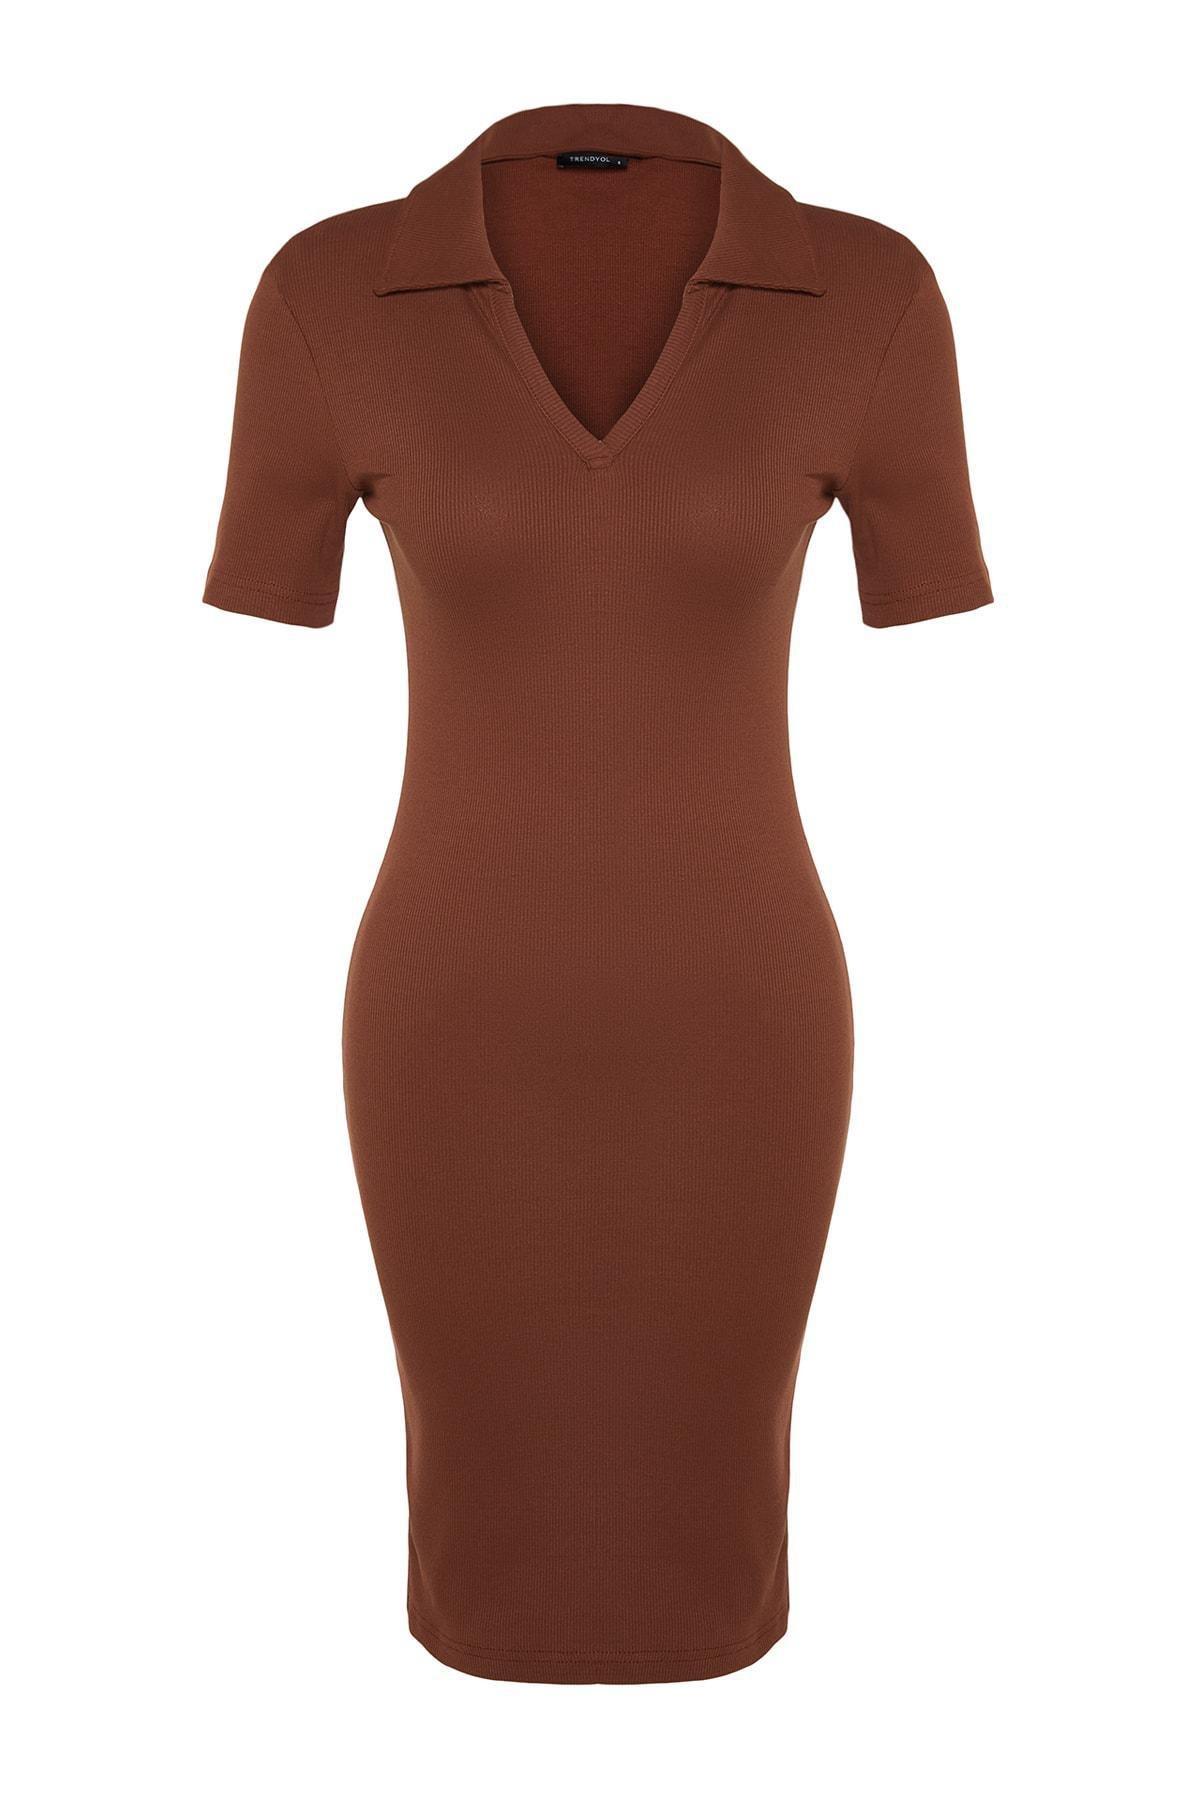 Trendyol - Brown Bodycon Dress